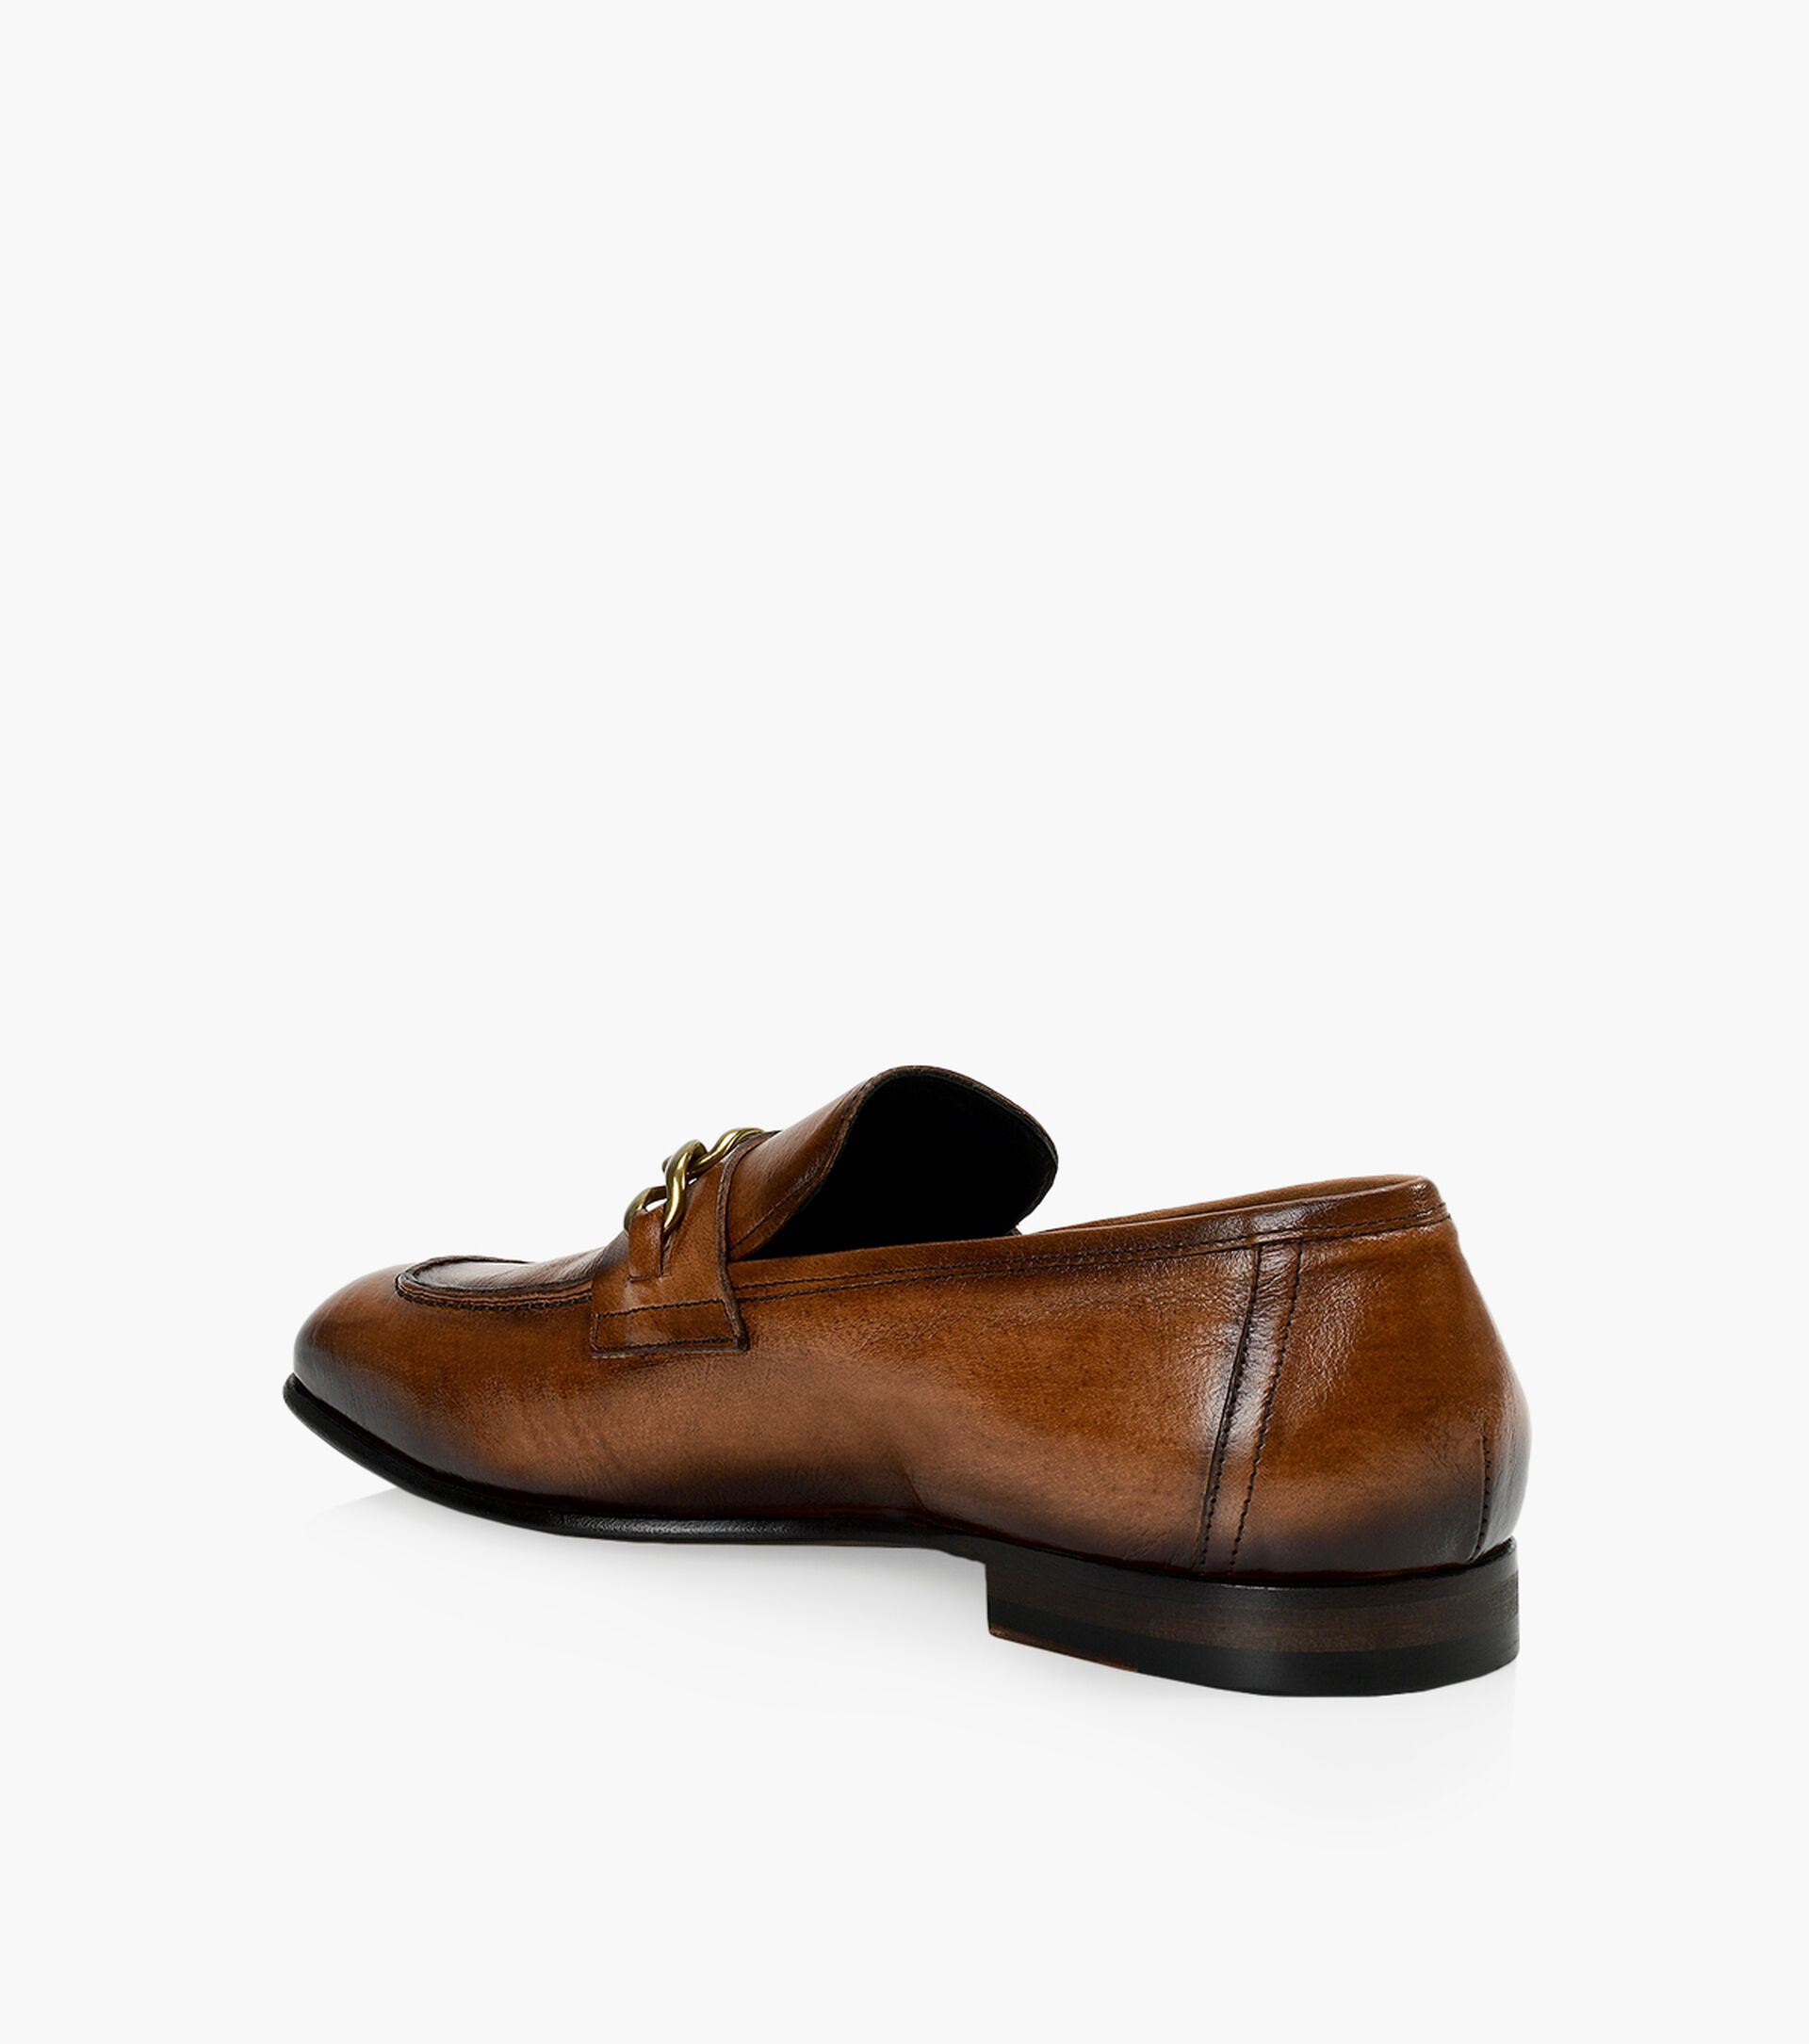 JO GHOST WOODY - Cuir | Browns Shoes